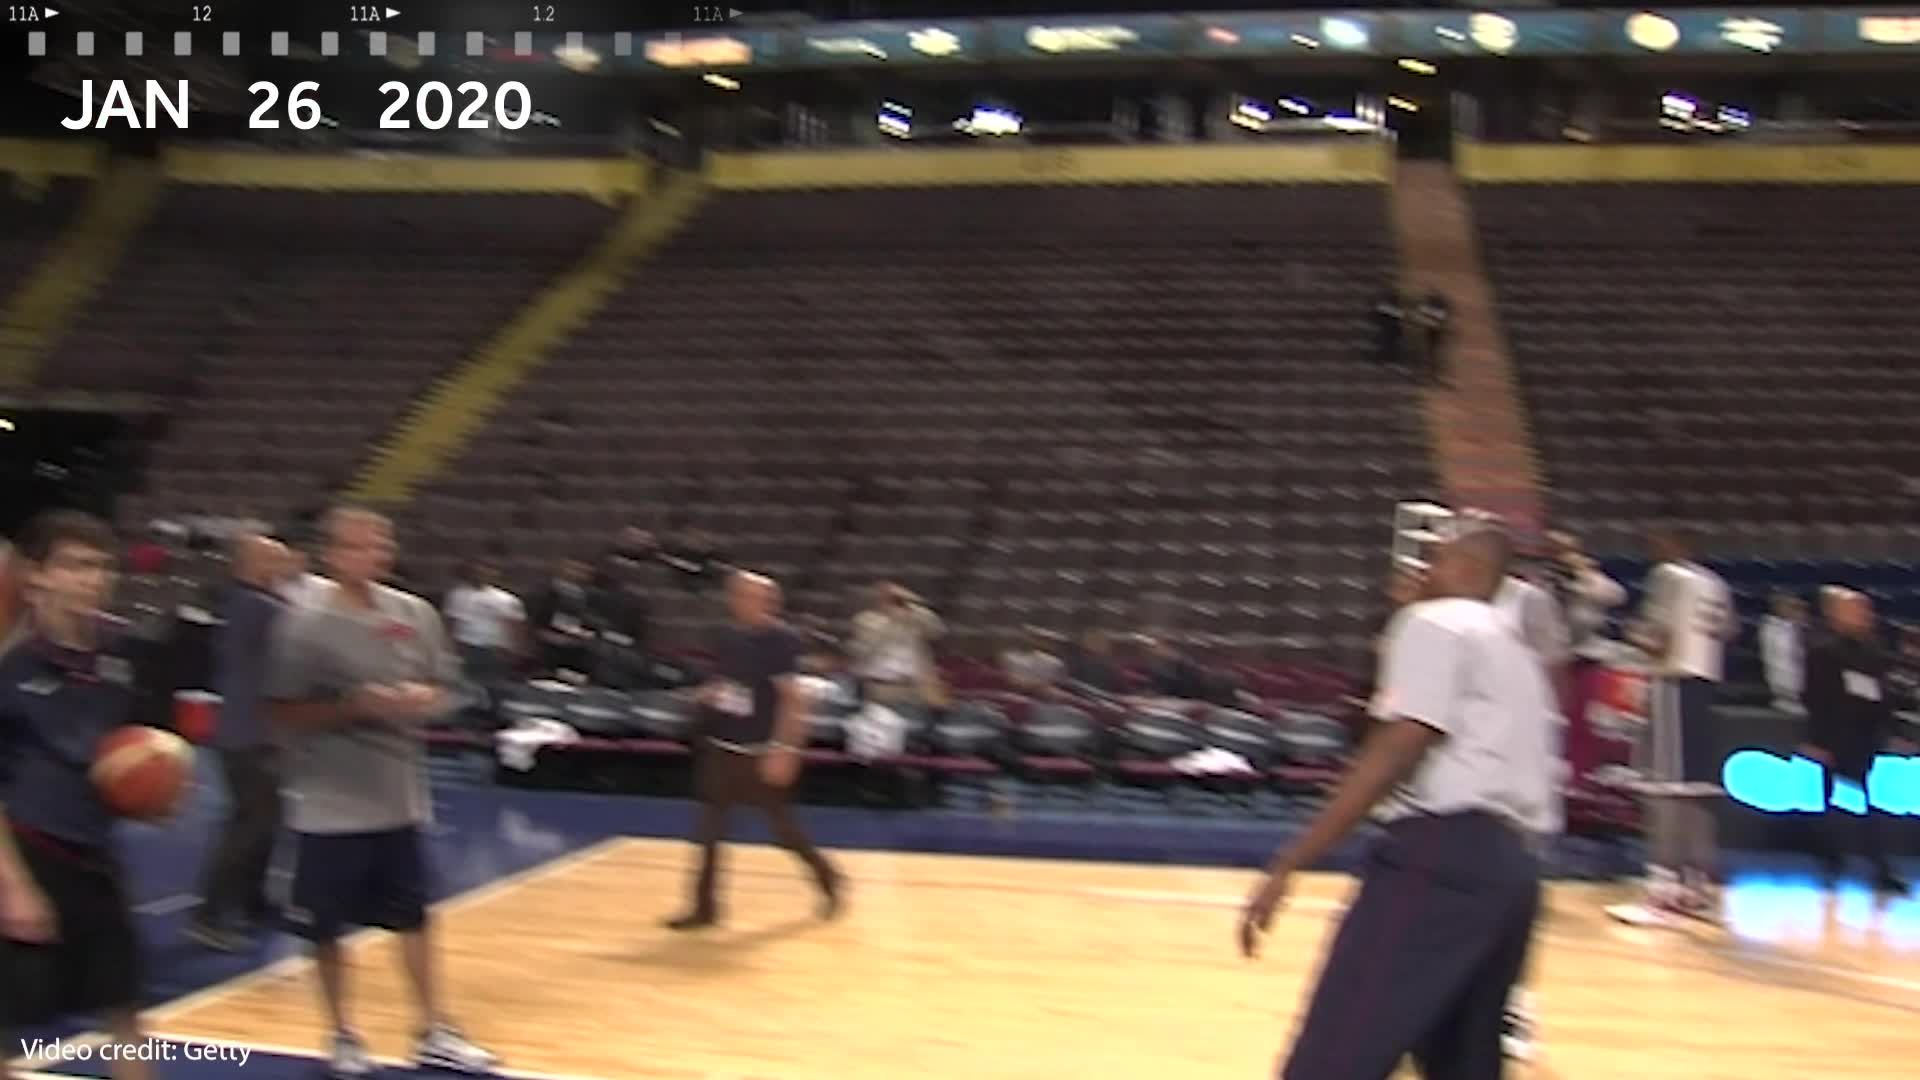 Legendary Laker Kobe Bryant honored in NBA's 75th anniversary video